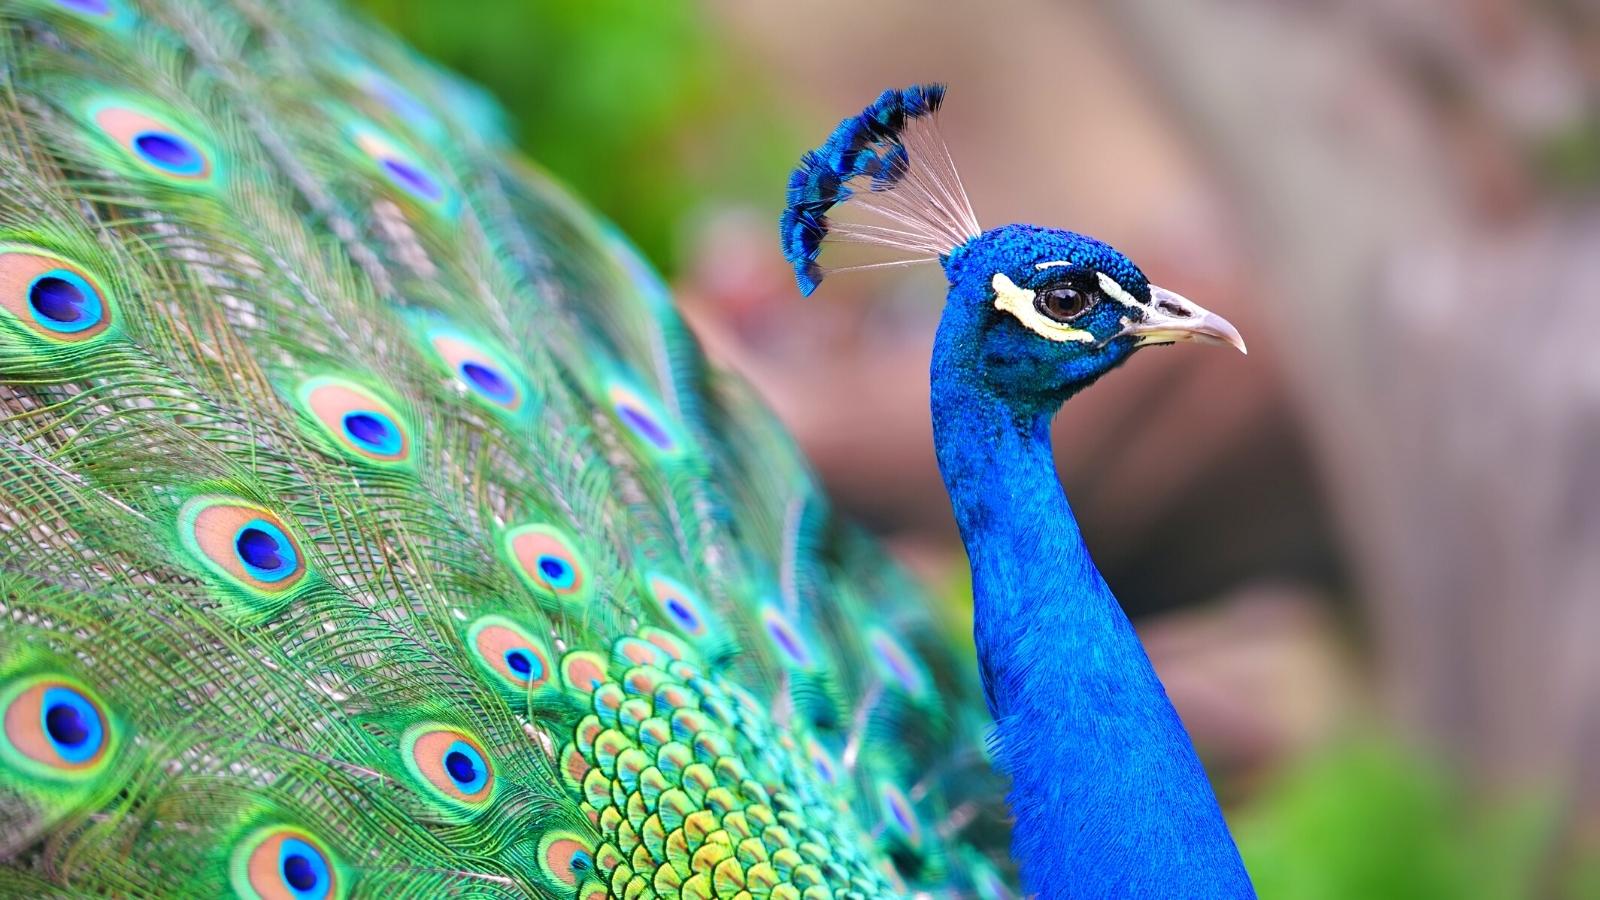 Peacock around my home - Understanding your dreams - Kaya